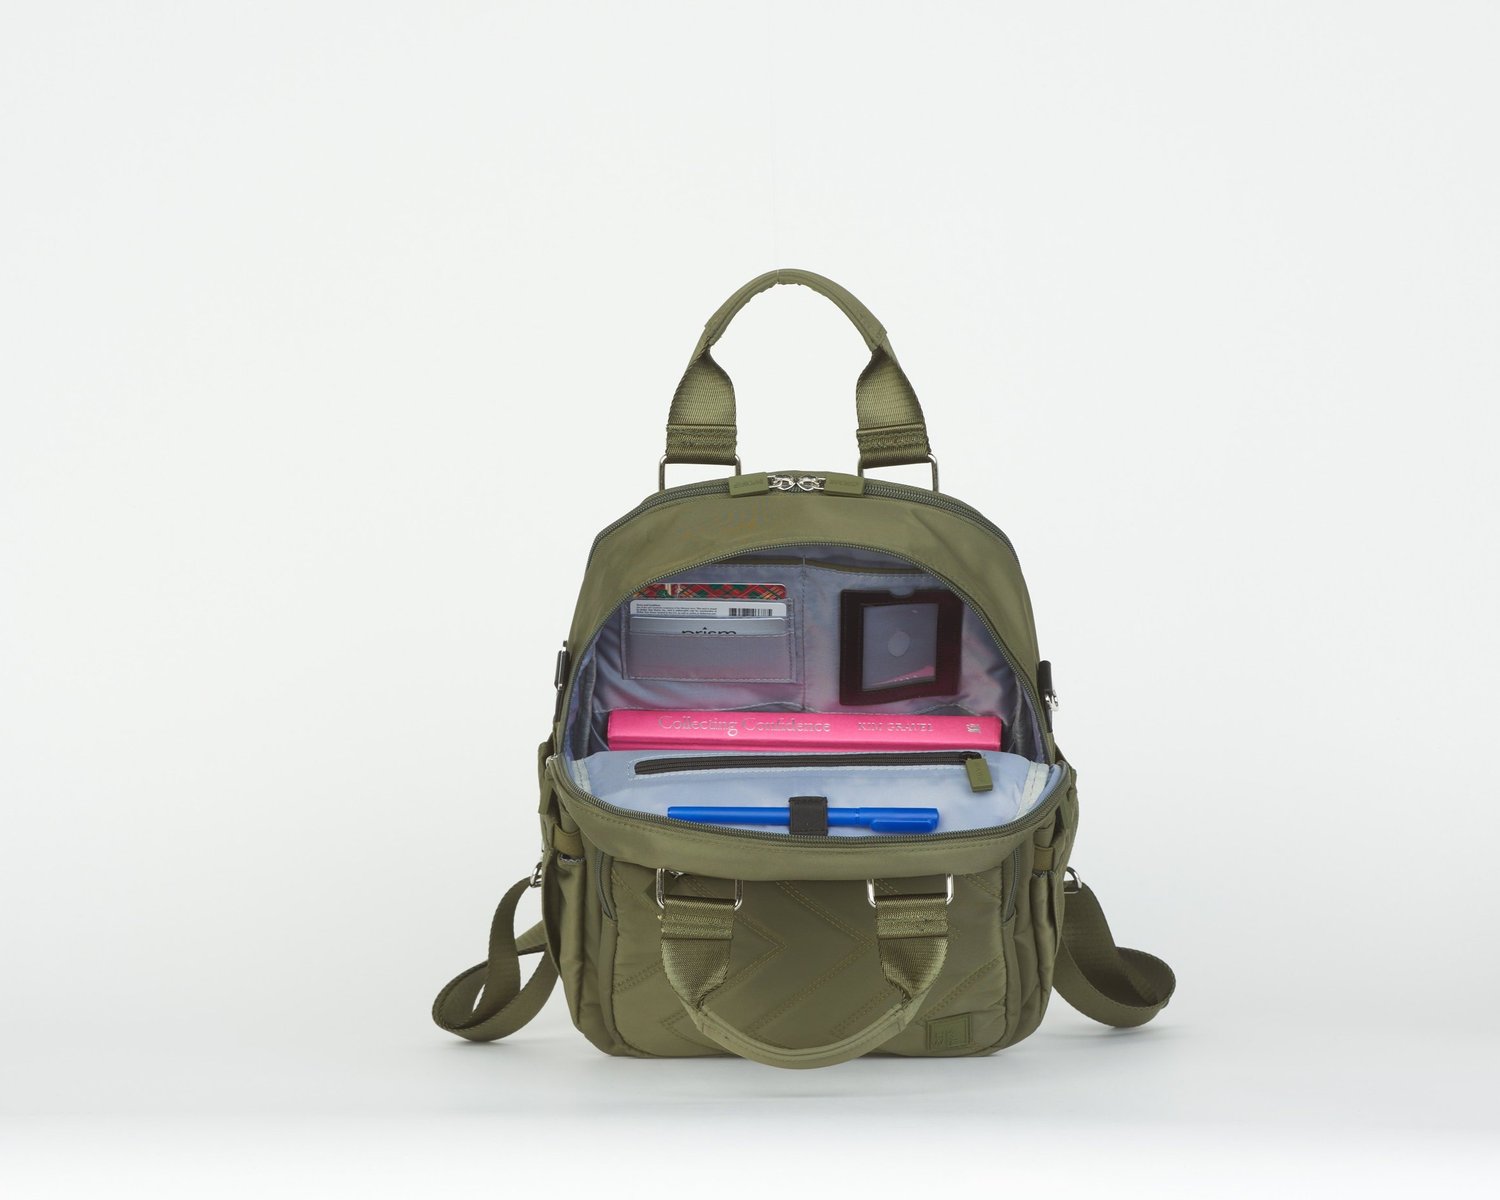 Mono - Luxury Handbag Accessories - Handbag Liners / Organisers